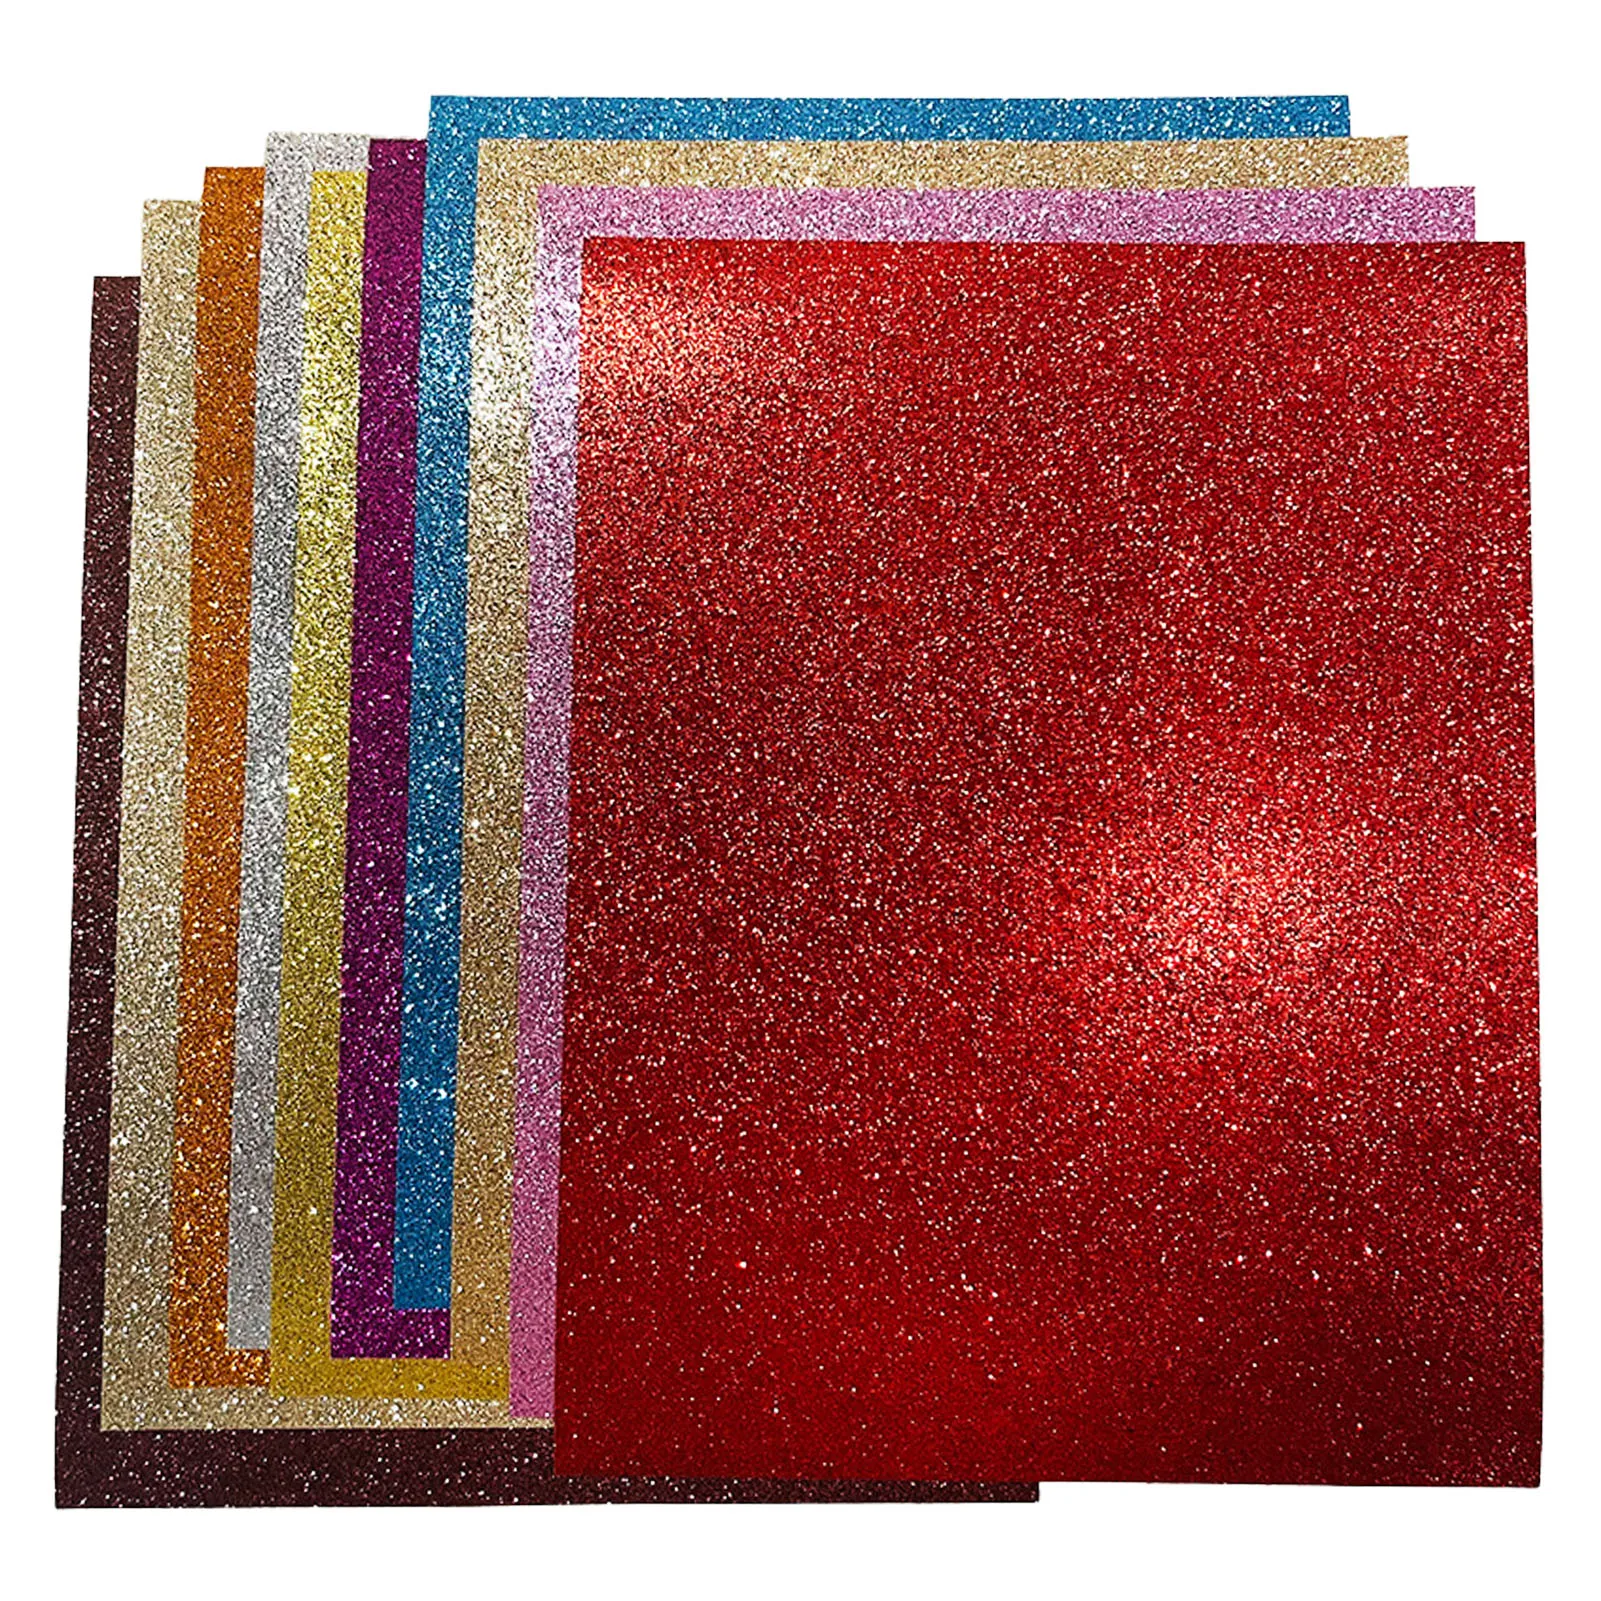 Glod Glitter Cardstock A4 Sparkling Glitter Card Paper Sparkling Craft Paper 10 Colors 120 GSM For Gift Packaging Scrapbooking